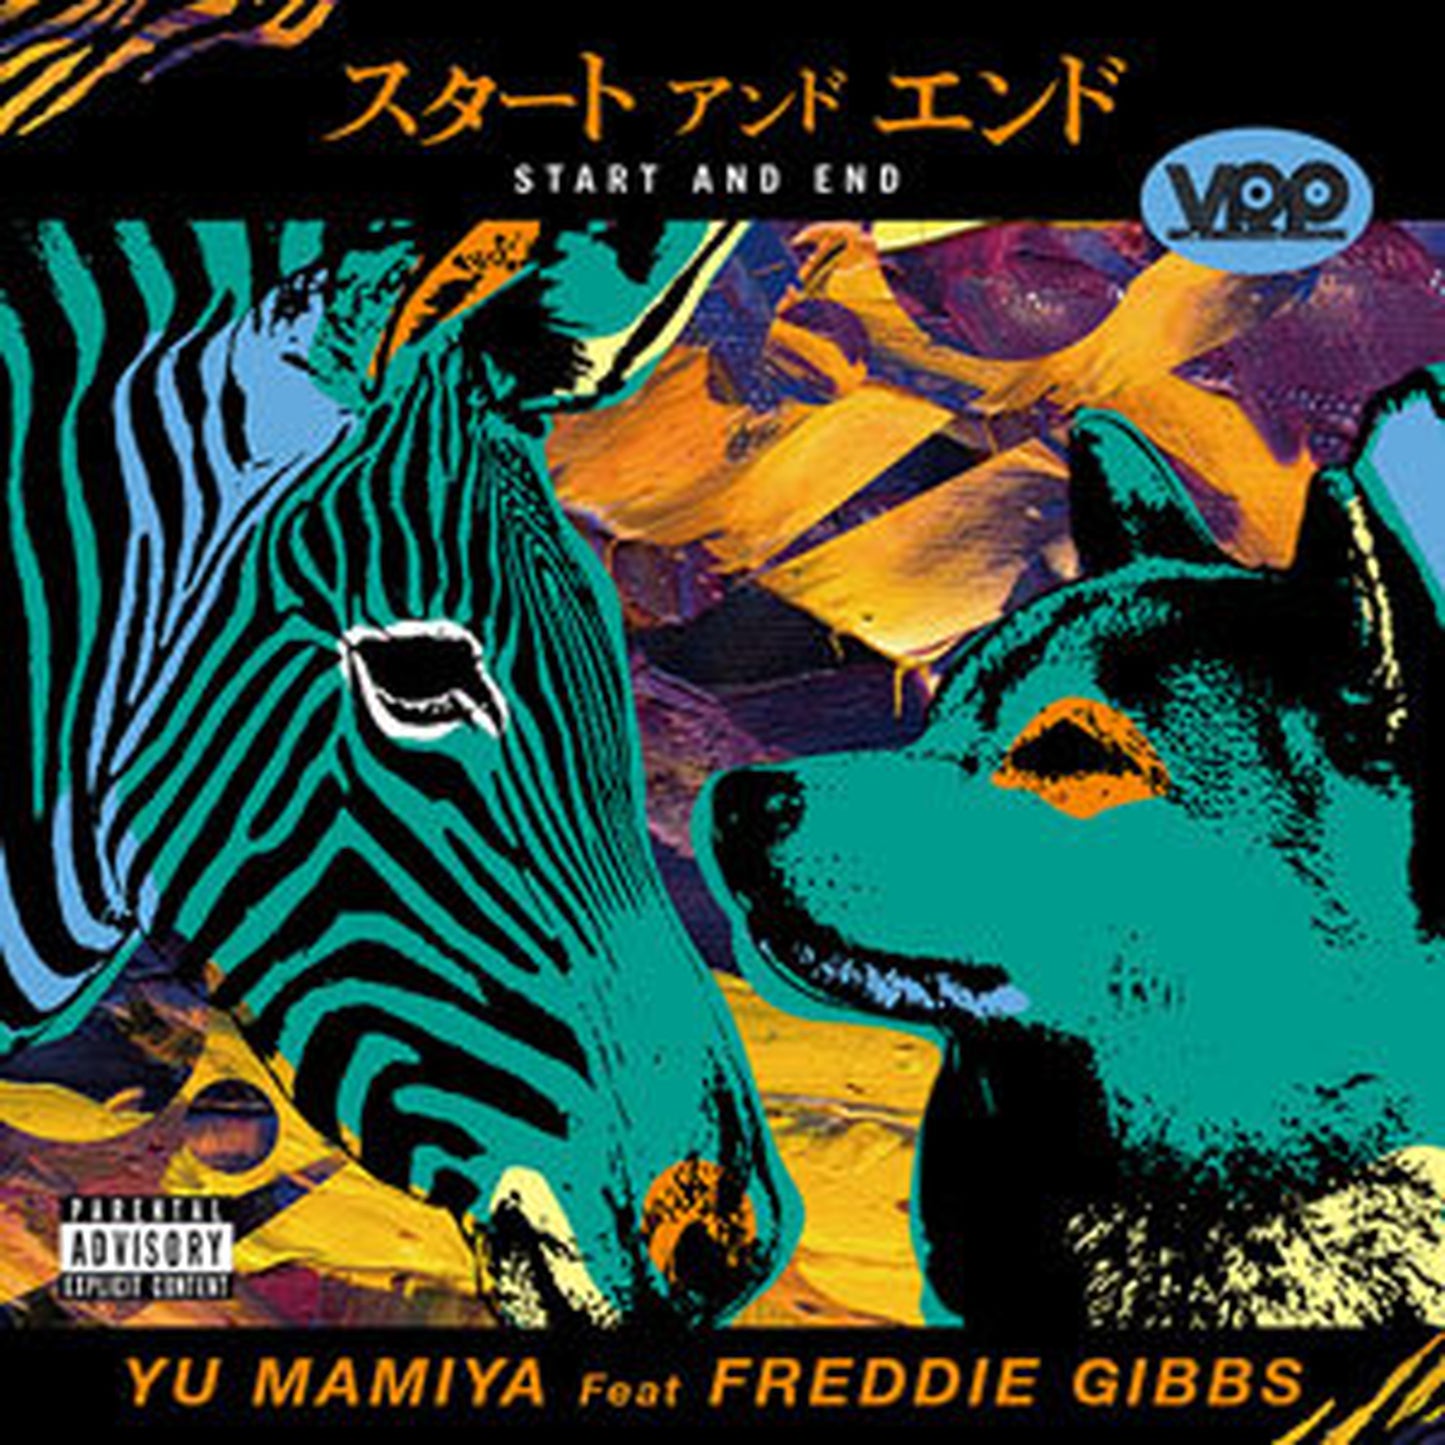 【7"】Yu Mamiya feat. Freddie Gibbs - Start And End